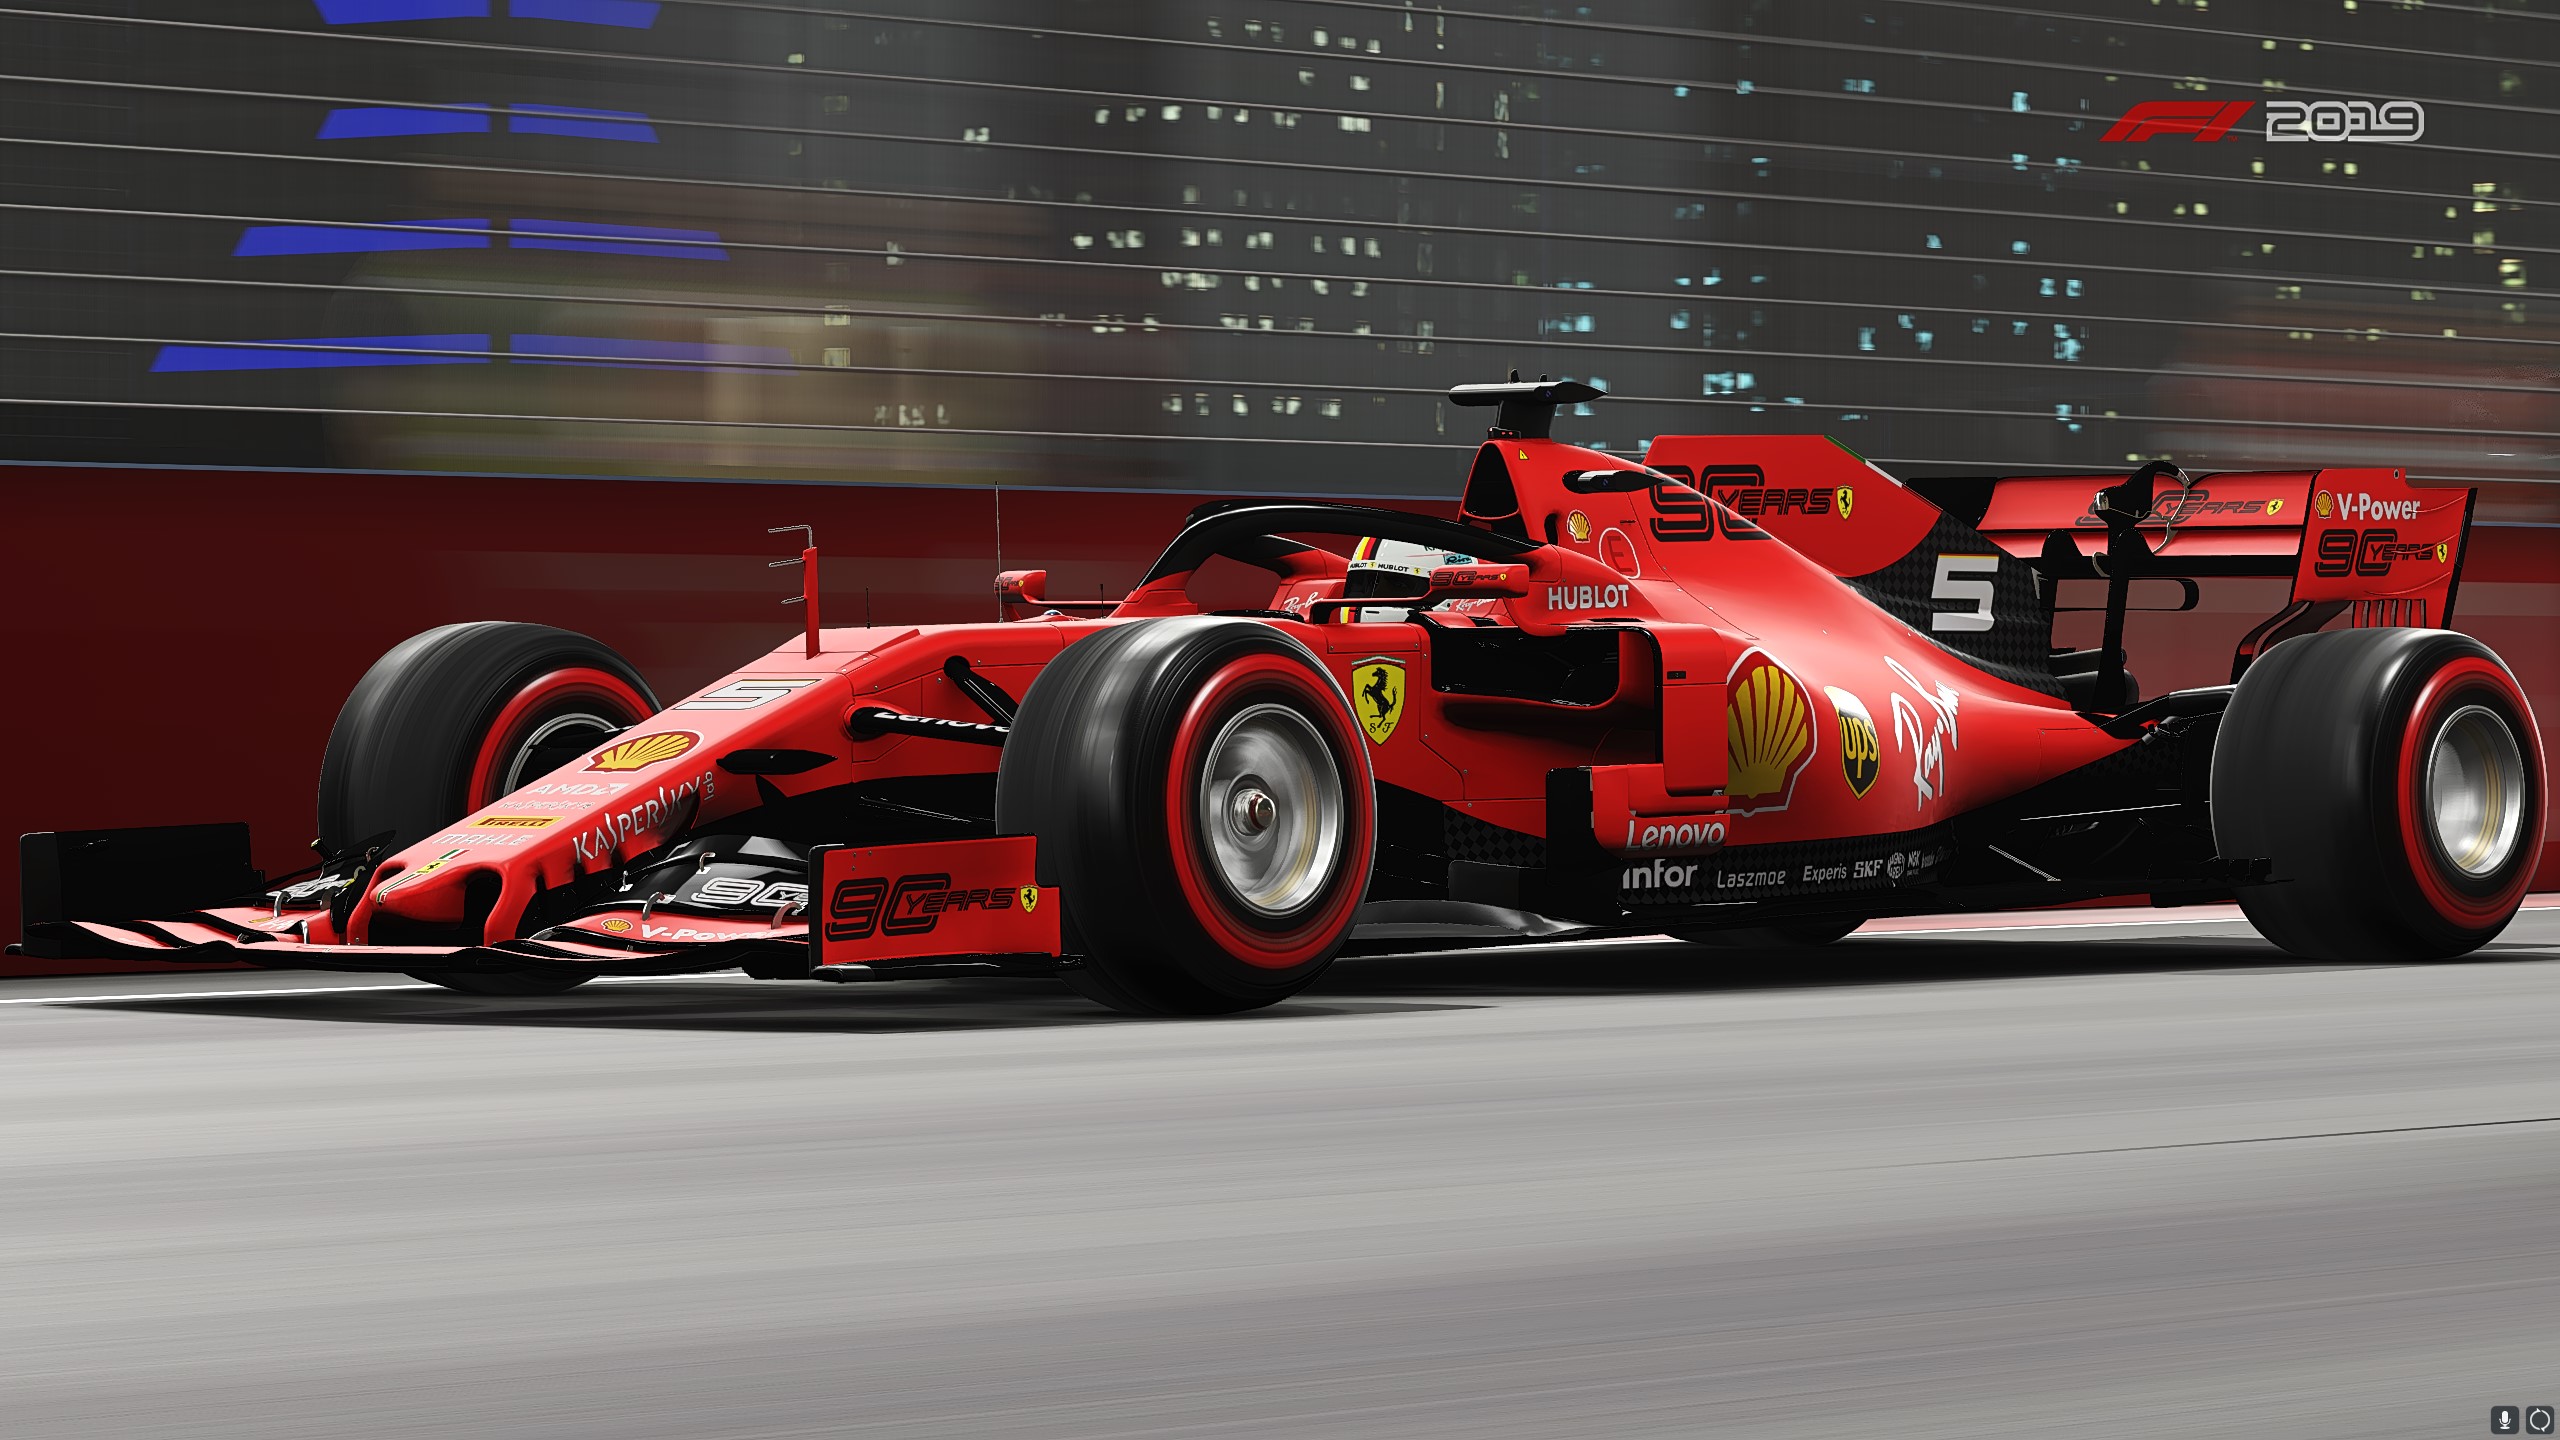 Ferrari Sf90 Race Car 2560x1440